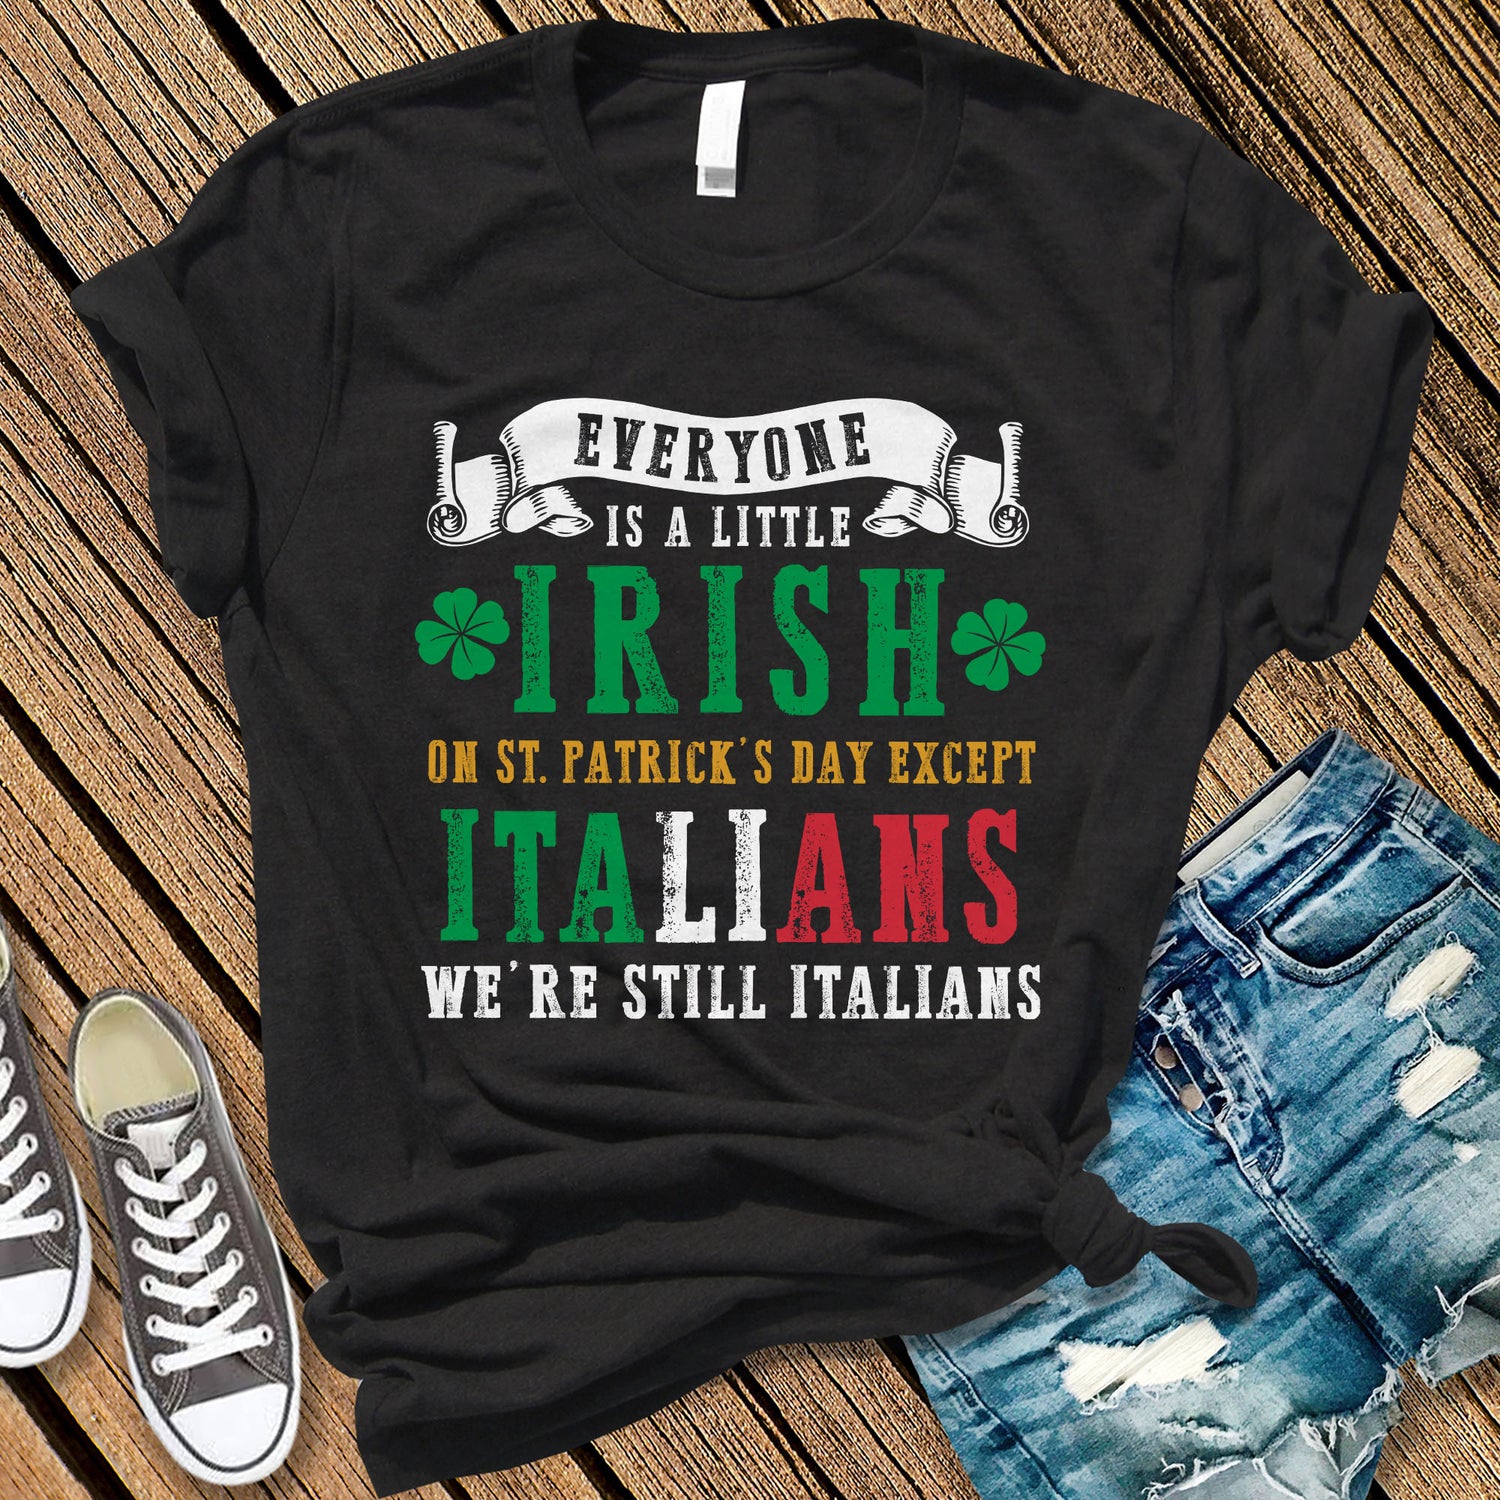 Italians Only!